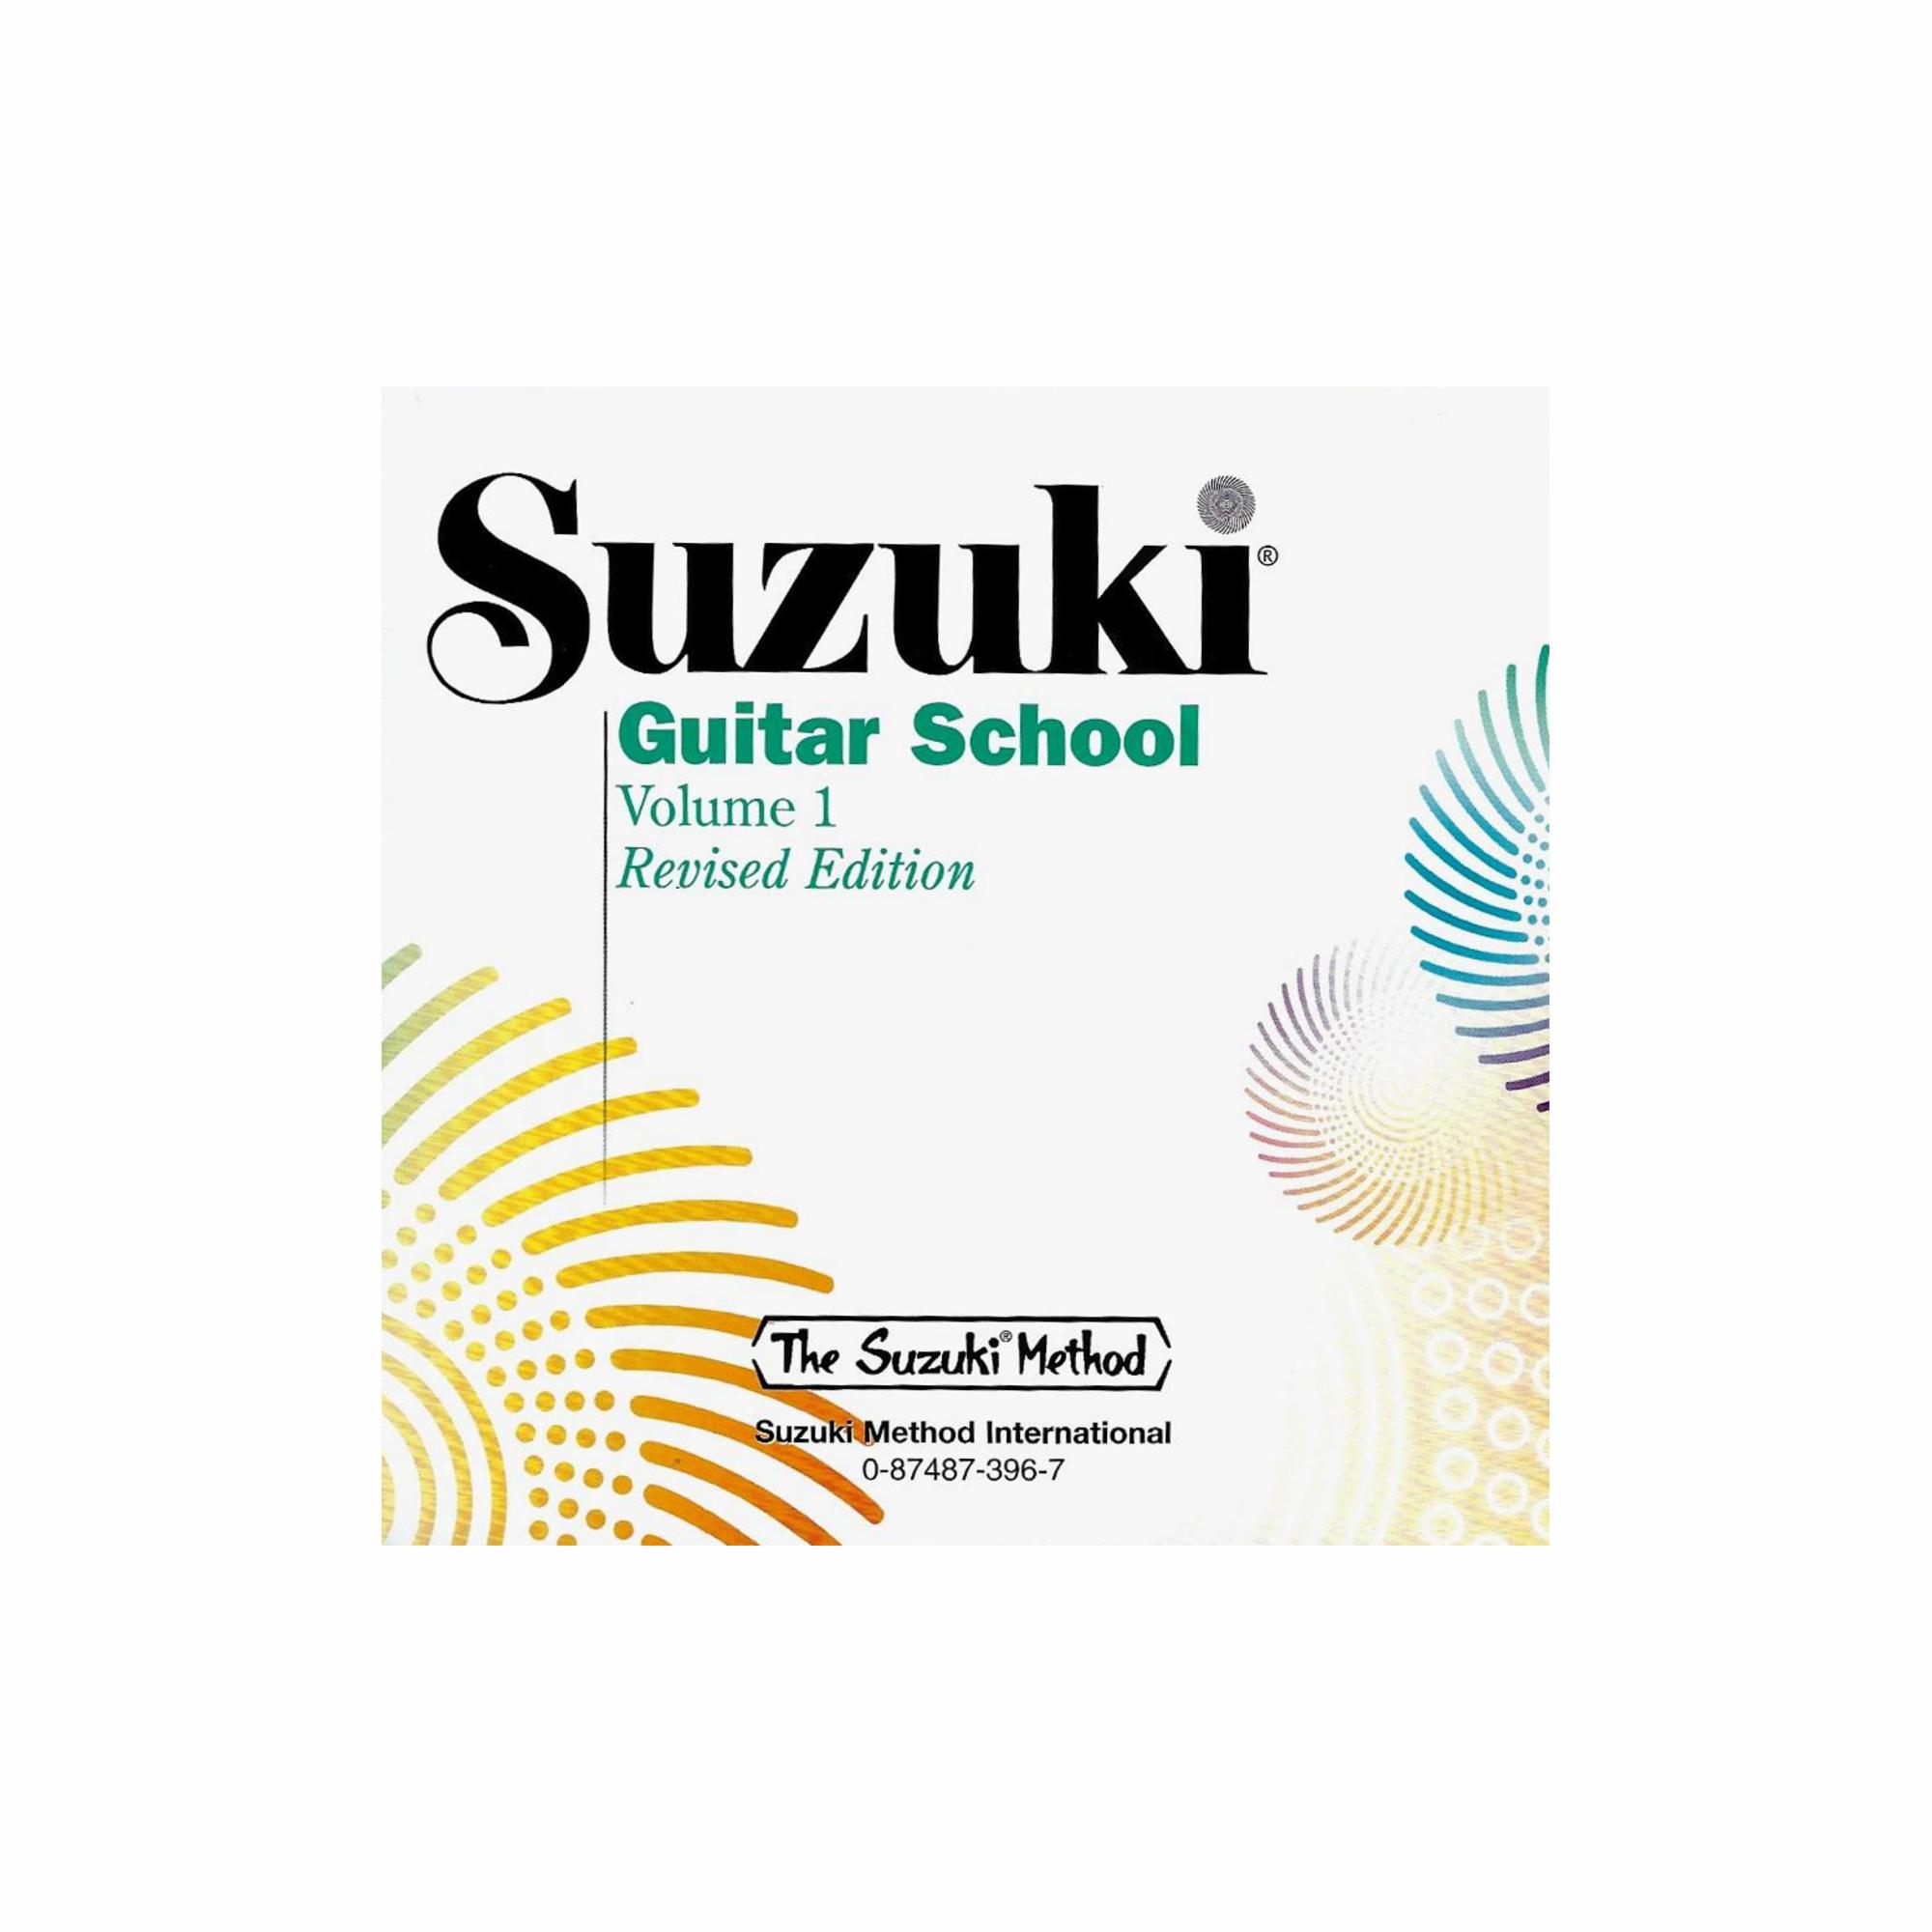 Suzuki Guitar School: CD's